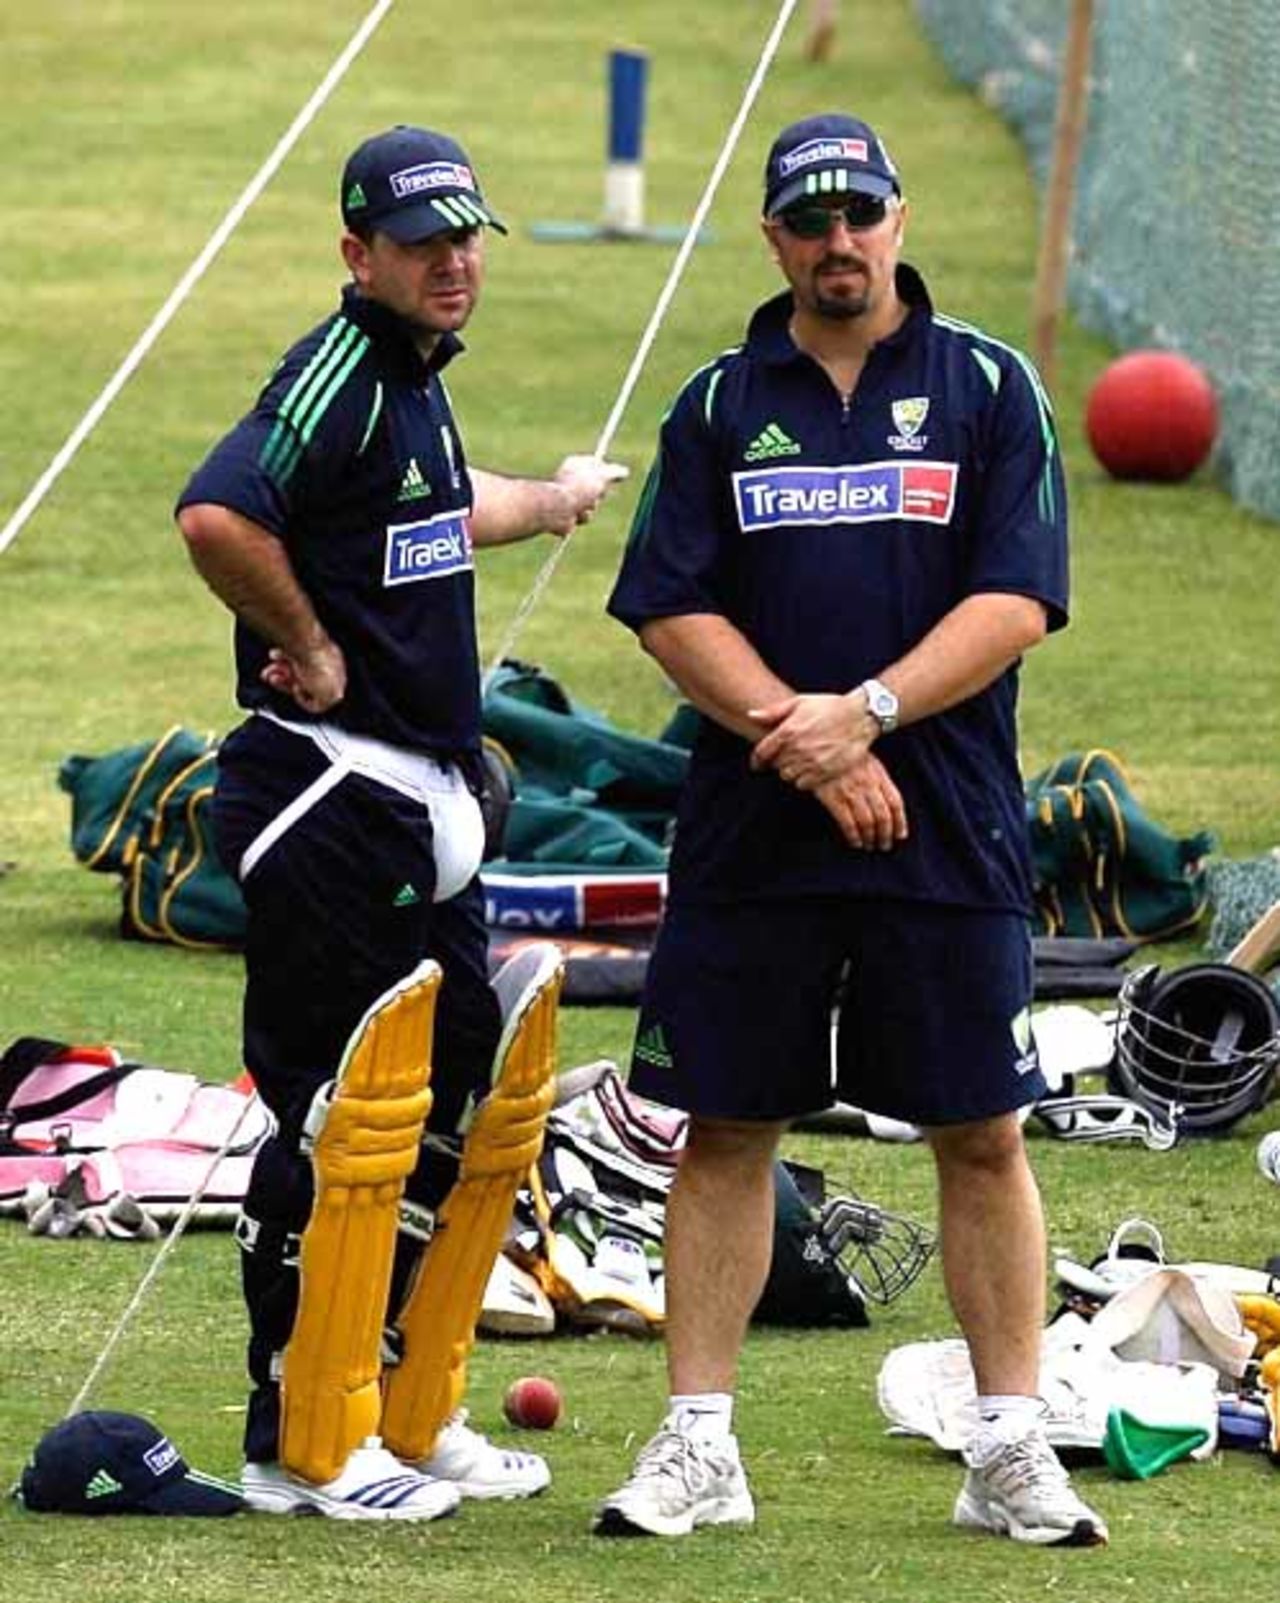 Ricky Ponting and Alex Kountouris, the team physiotherapist,  look on as the Australian team practise at the nets, India v Australia ODI series, M Chinnaswamy Stadium, Bangalore, September 27, 2007